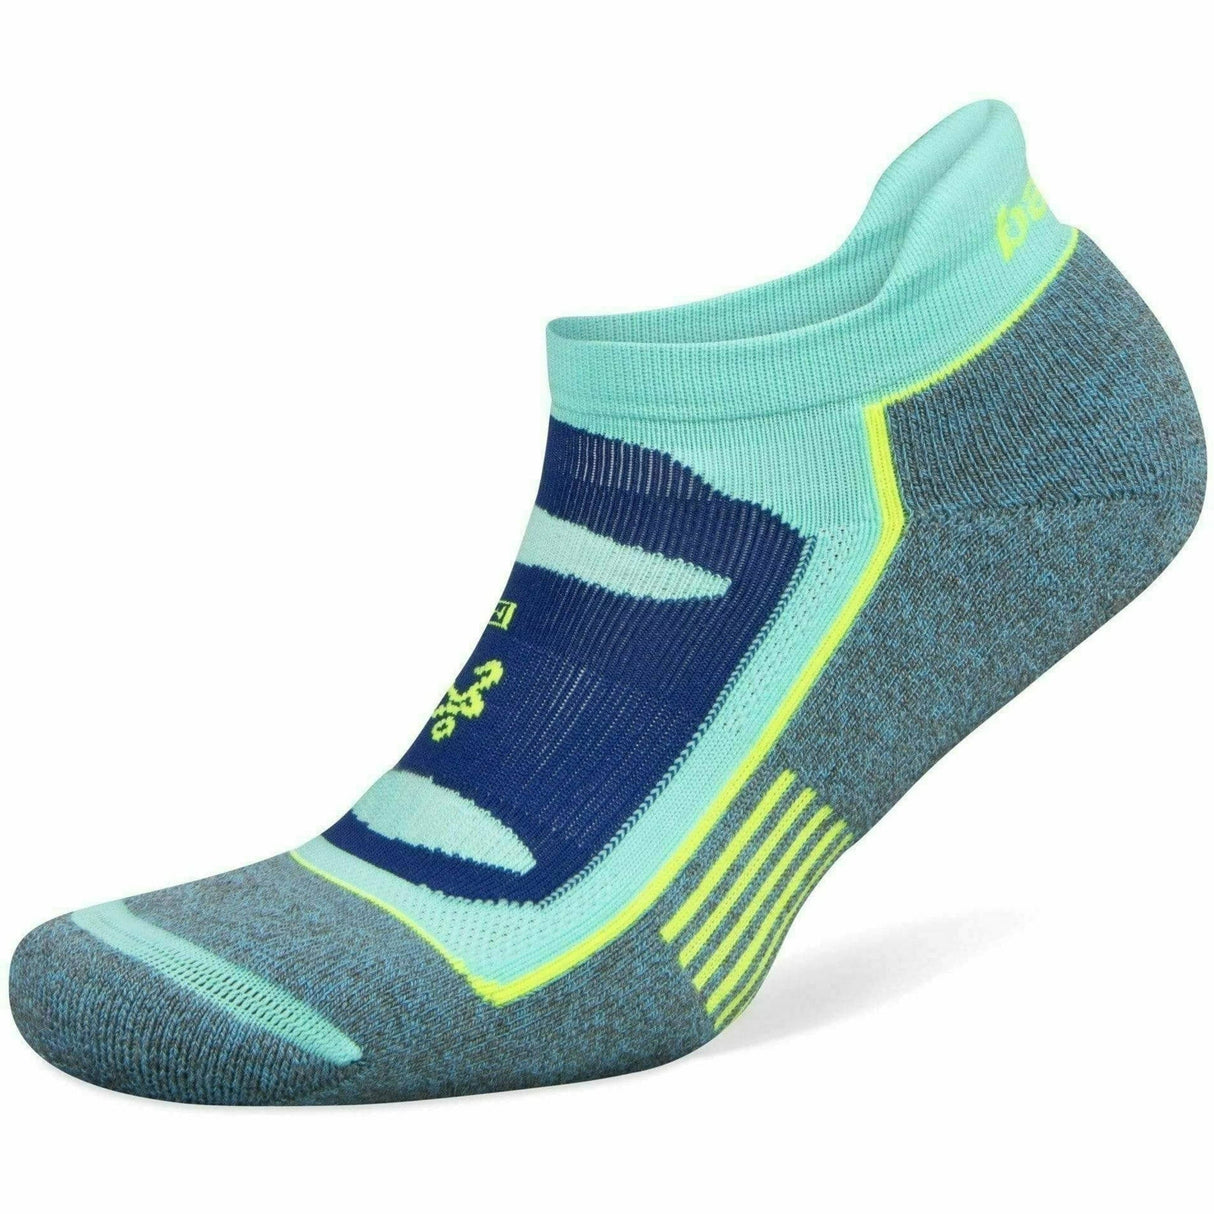 Balega Blister Resist No Show Socks - Clearance  -  Small / Ethereal Blue/Light Aqua